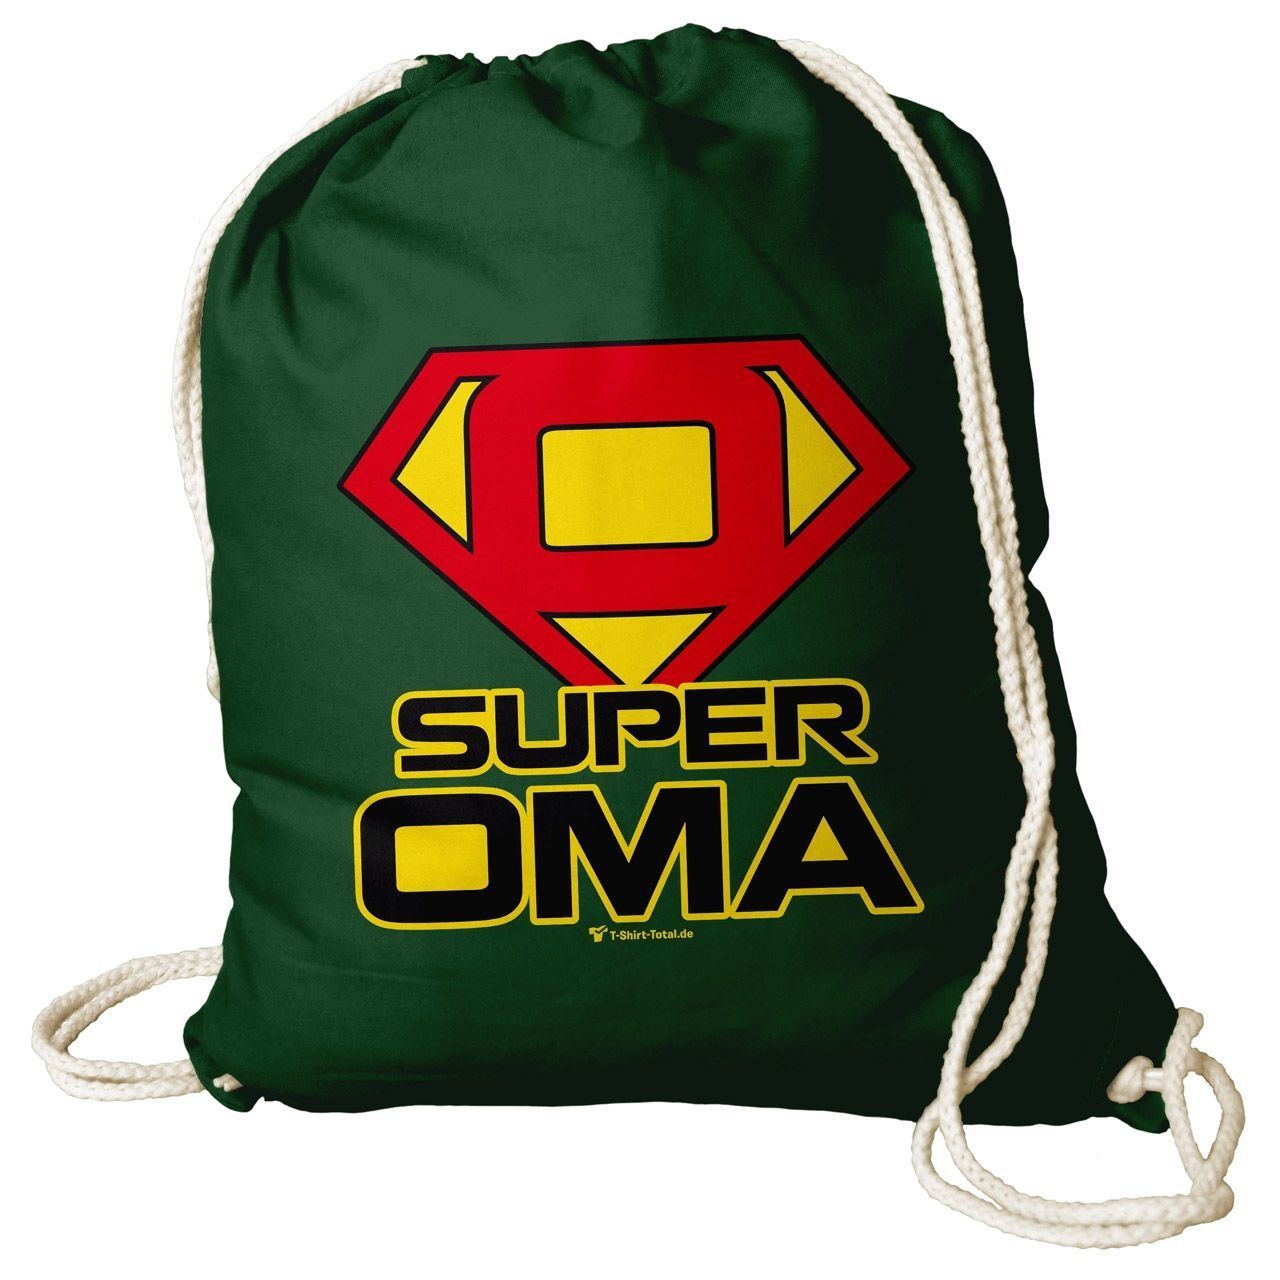 Super Oma Rucksack Beutel dunkelgrün